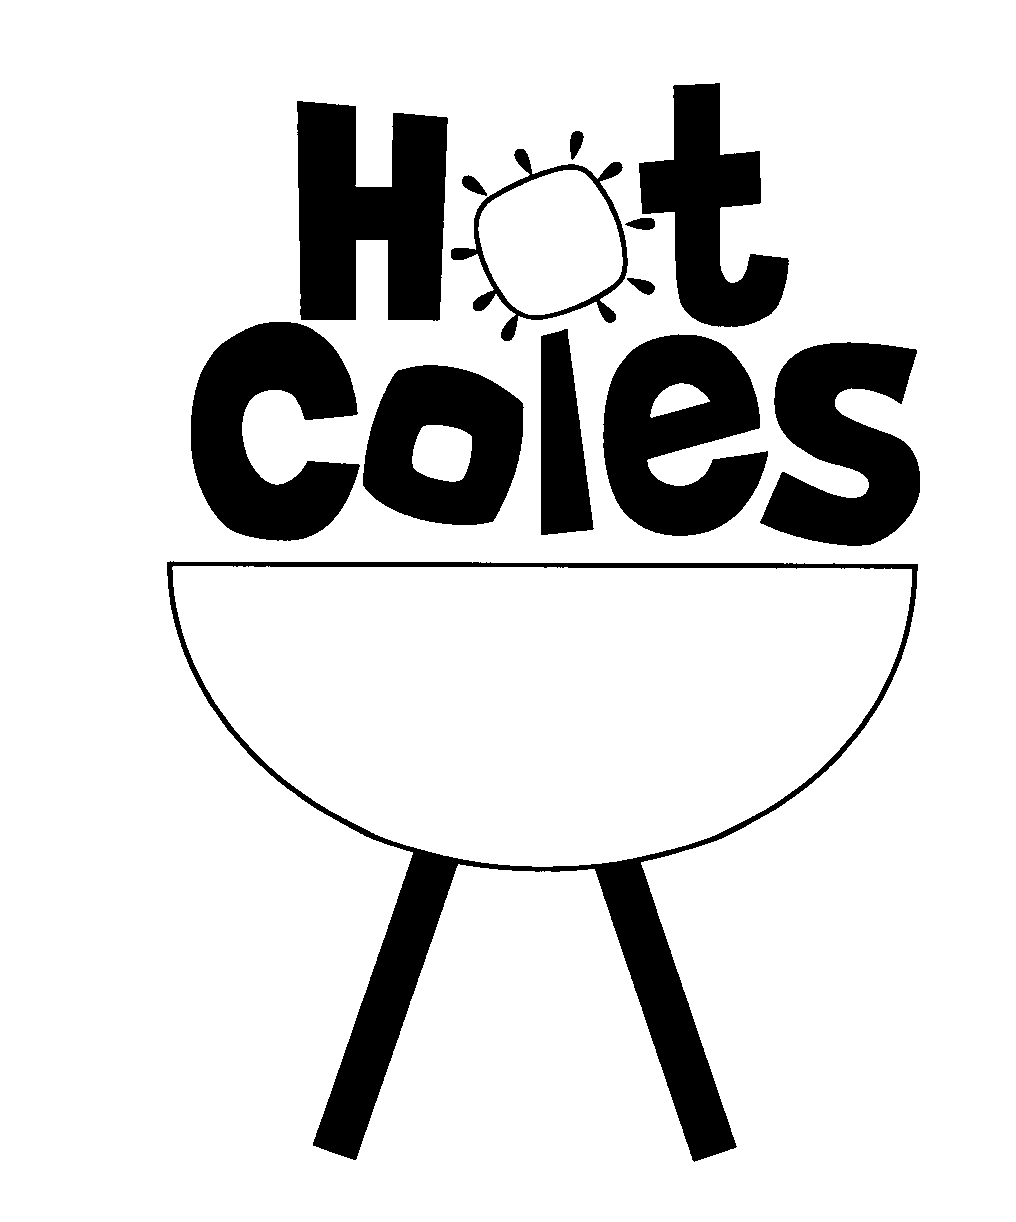 Trademark Logo HOT COLES